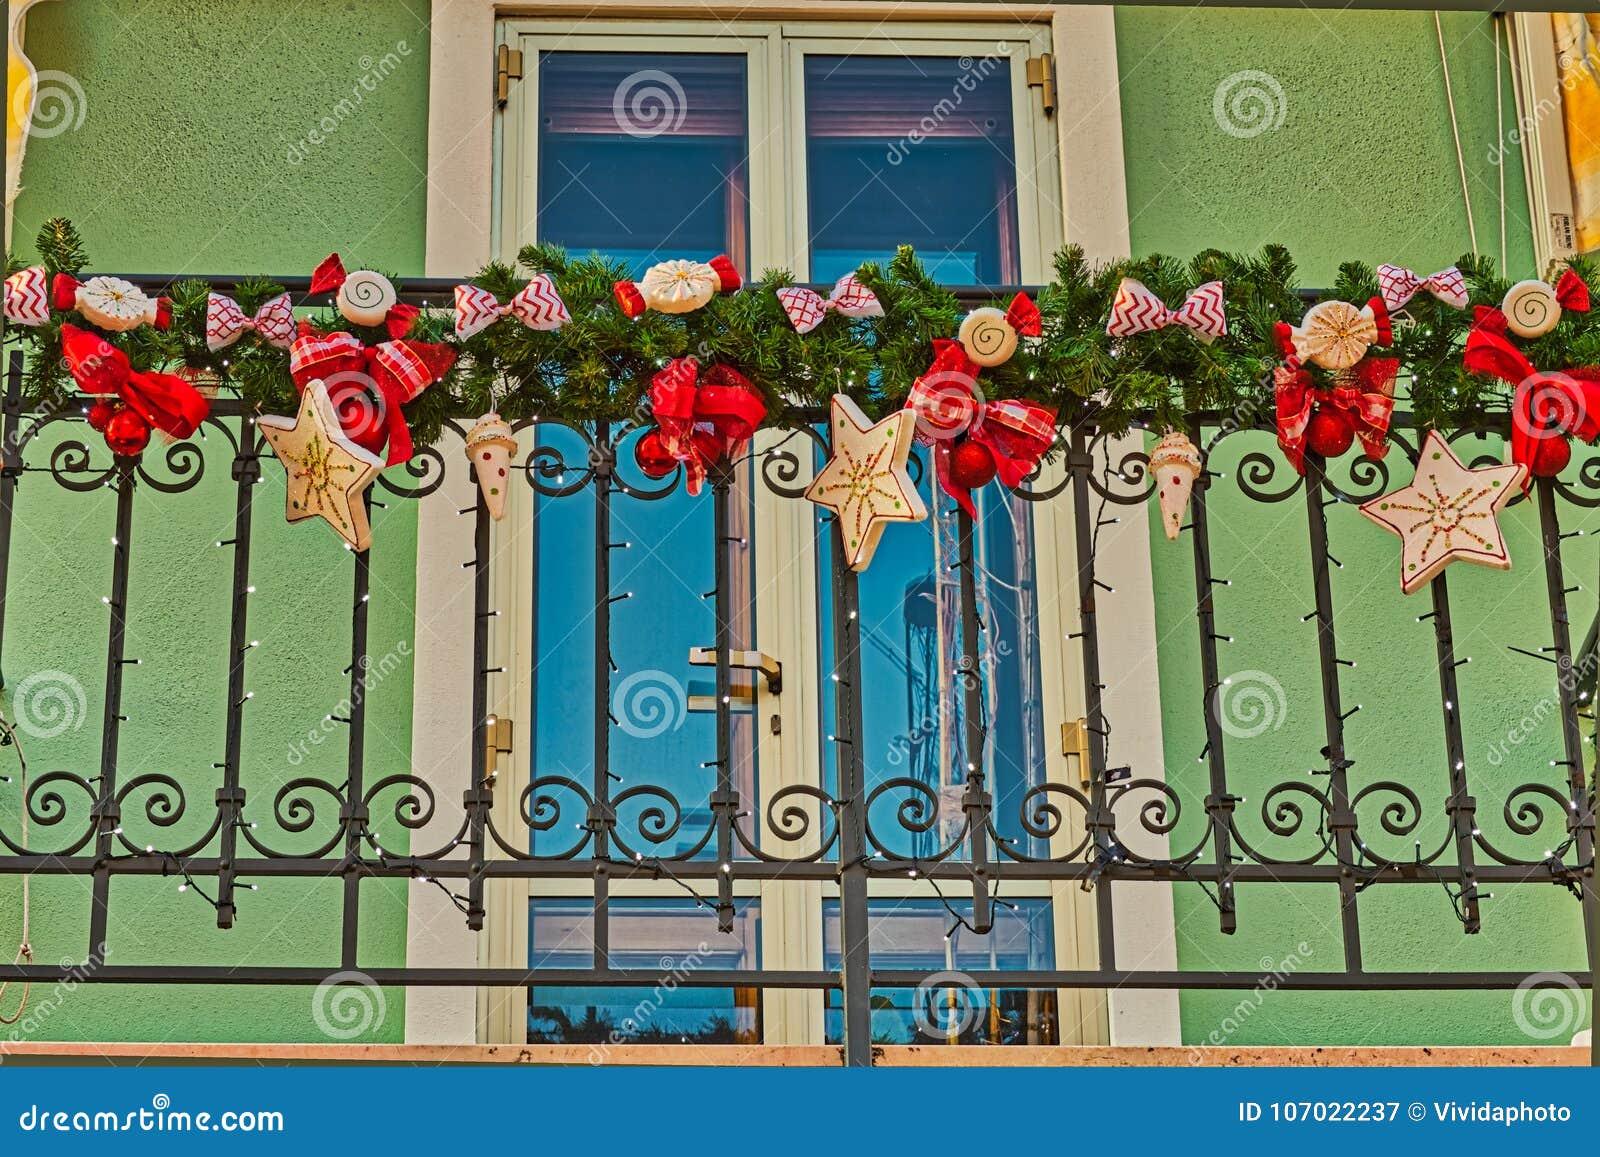 Christmas Decorations on a Balcony Stock Image - Image of railing ...